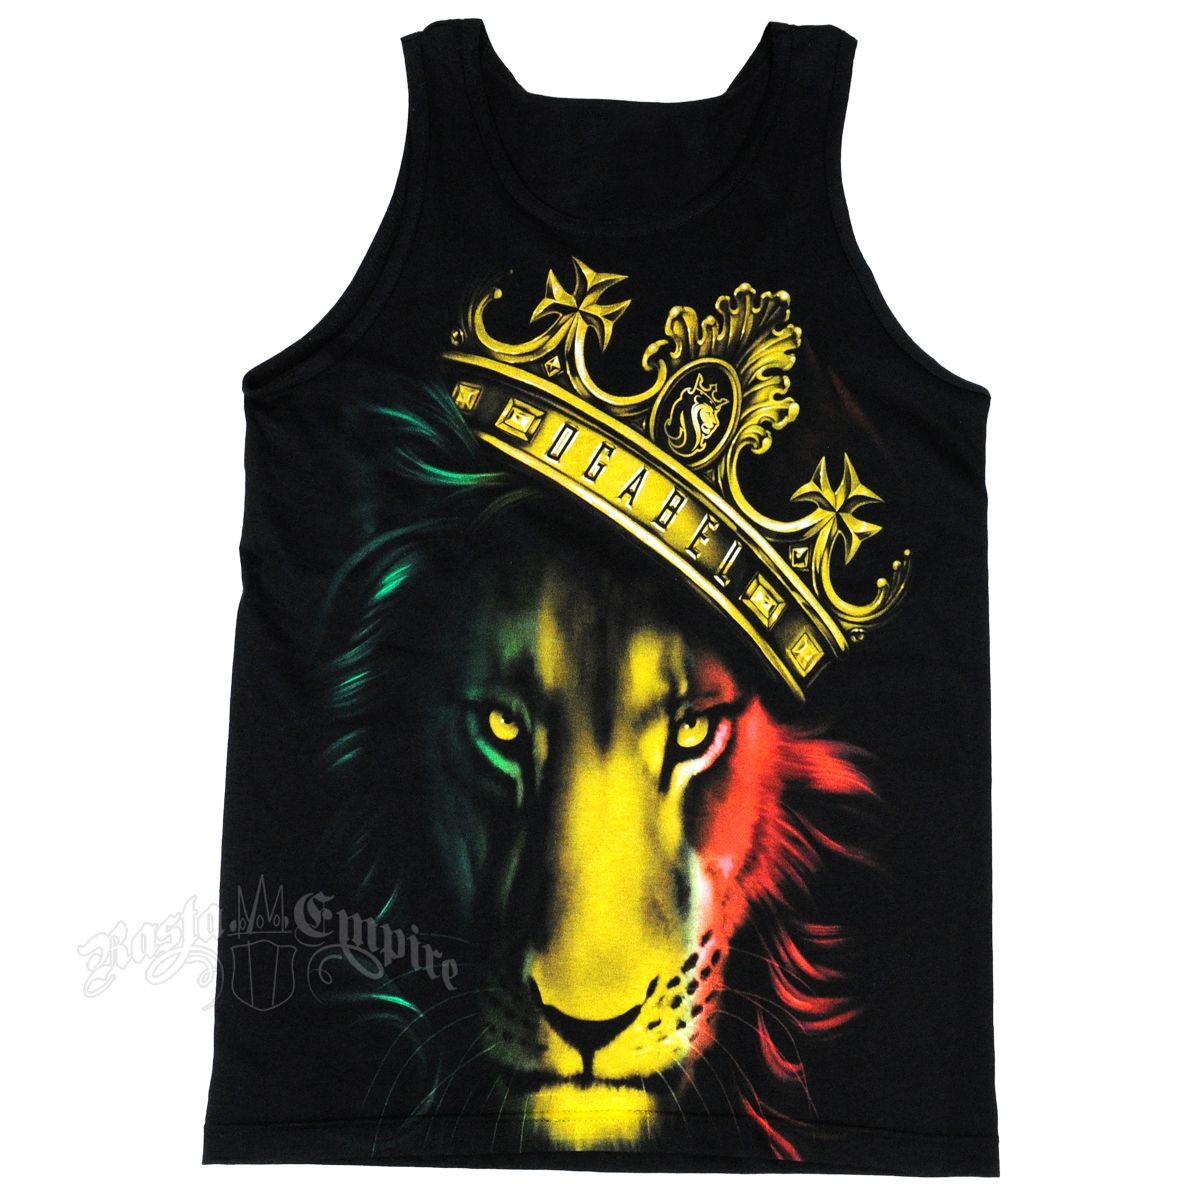 Red with Gold Lion Crown Logo - Fierce Rasta Lion And Crown Black Tank Top - Men's